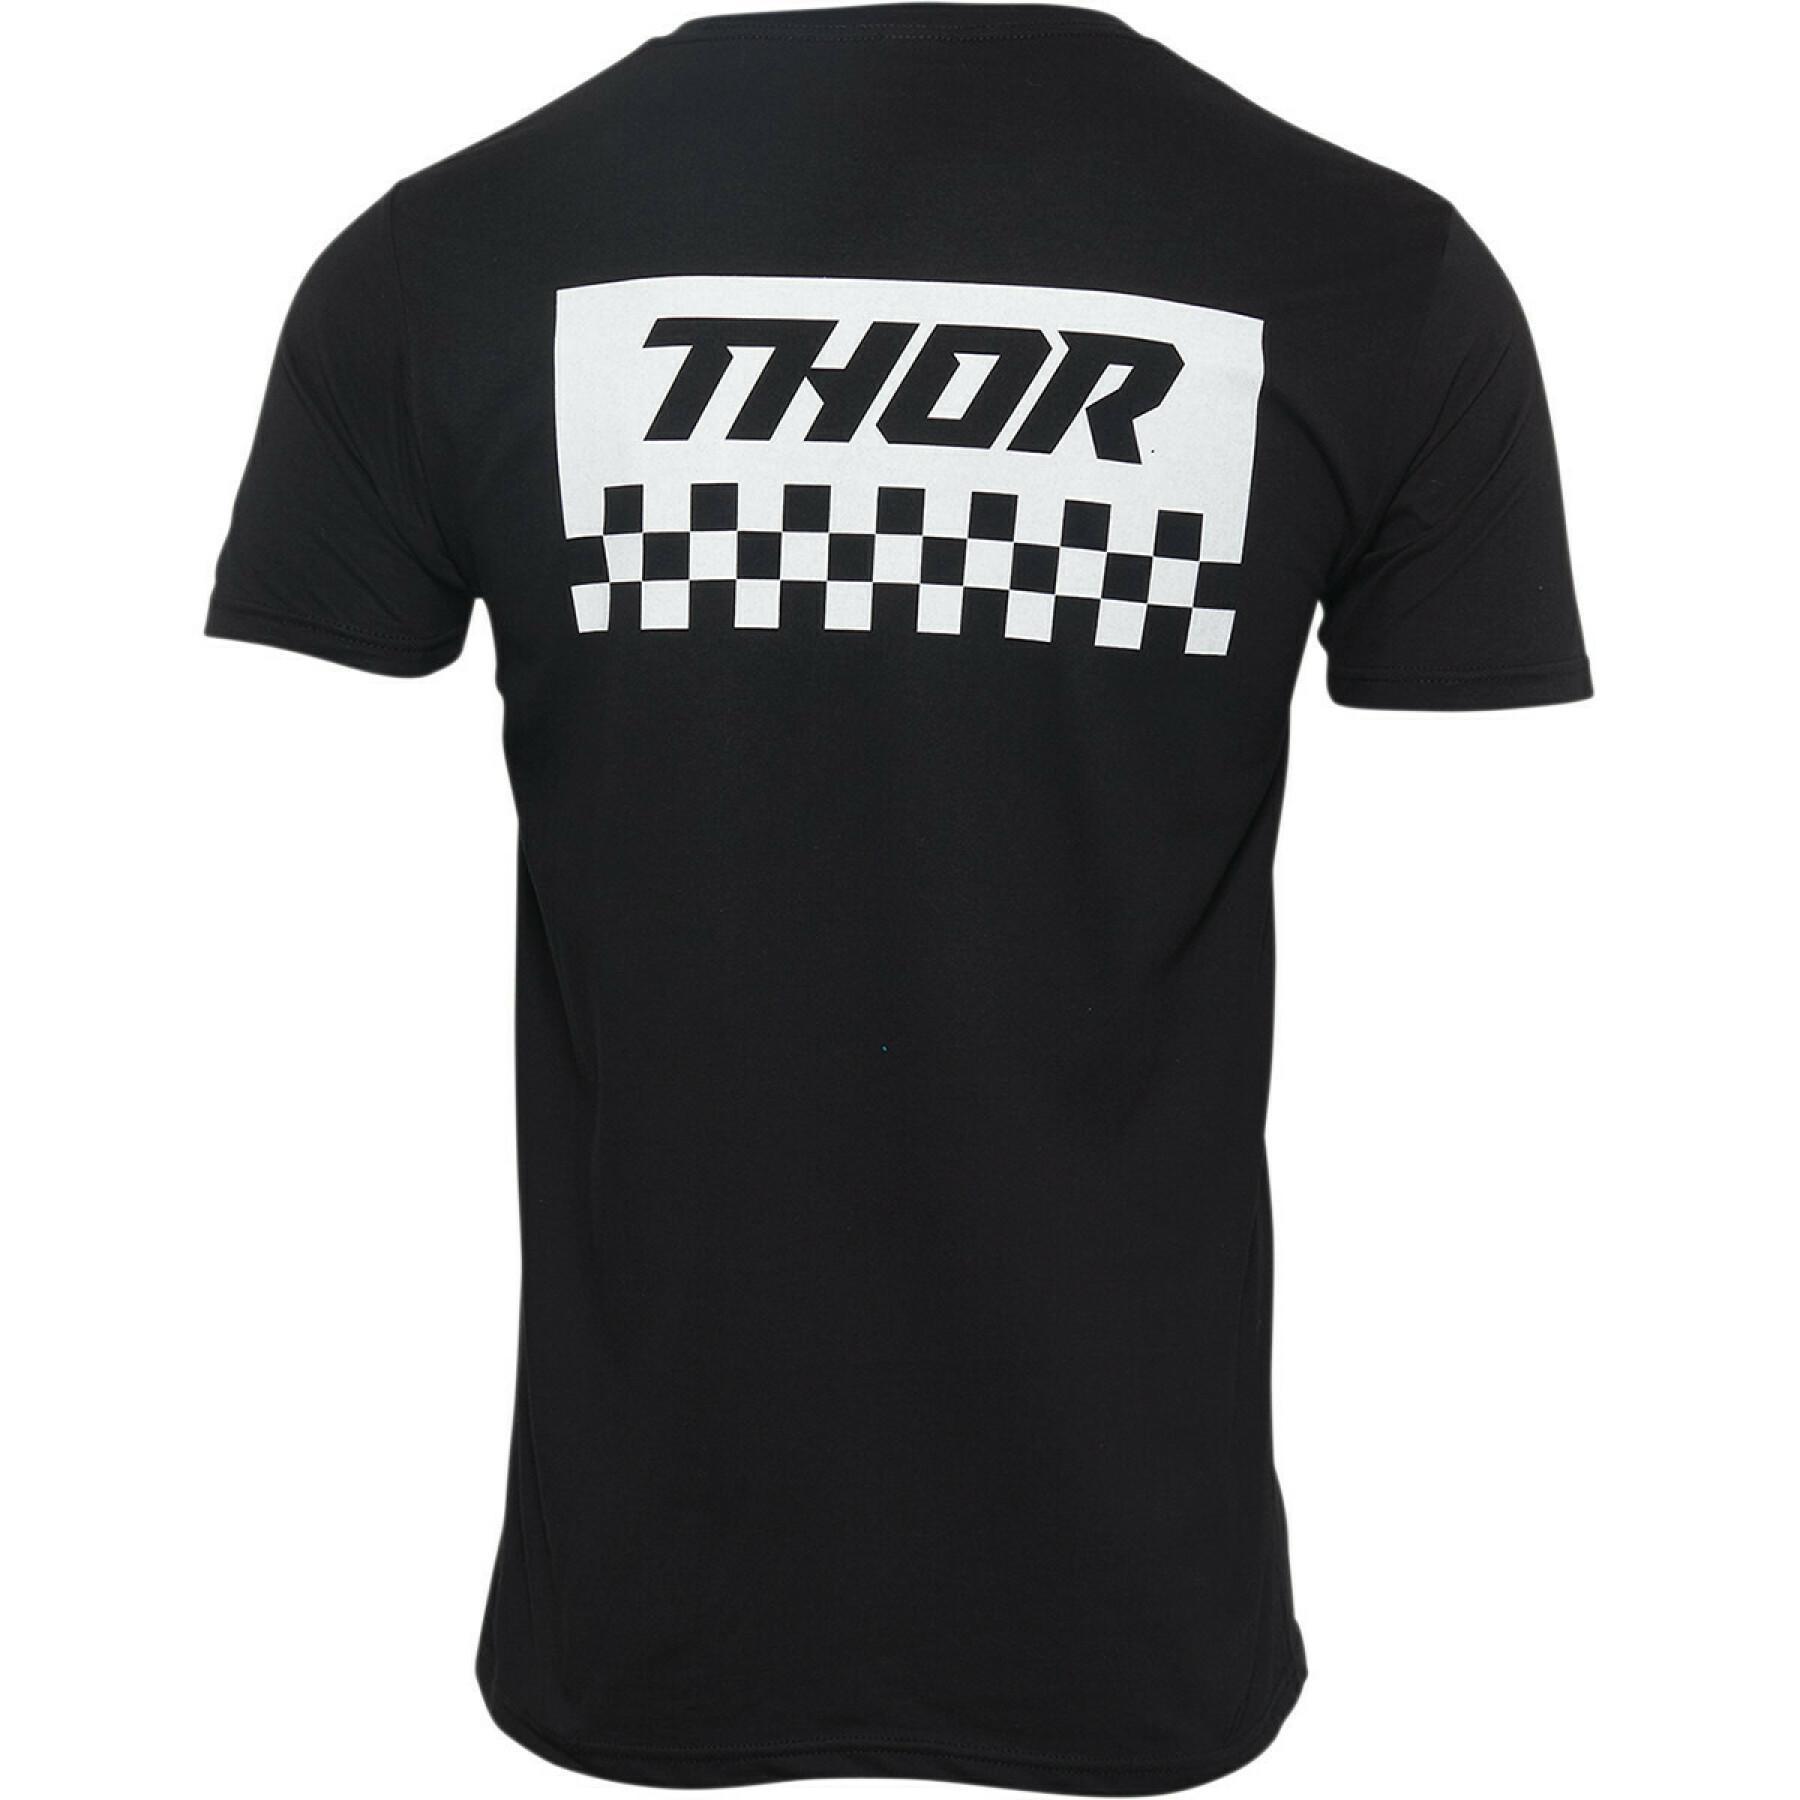 Koszulka Thor checkers